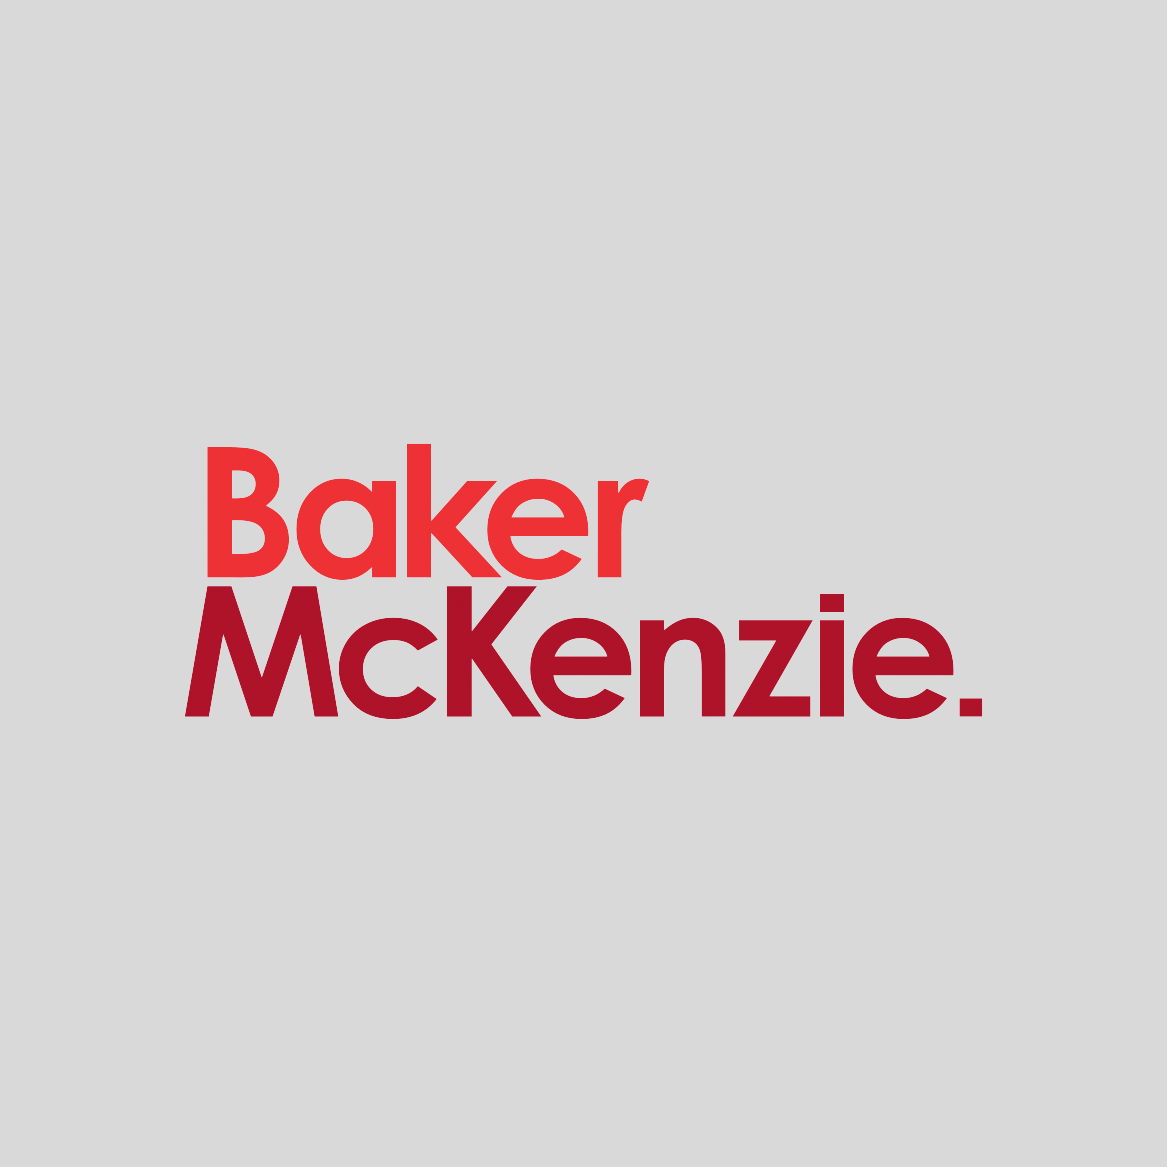 Baker McKenzie3